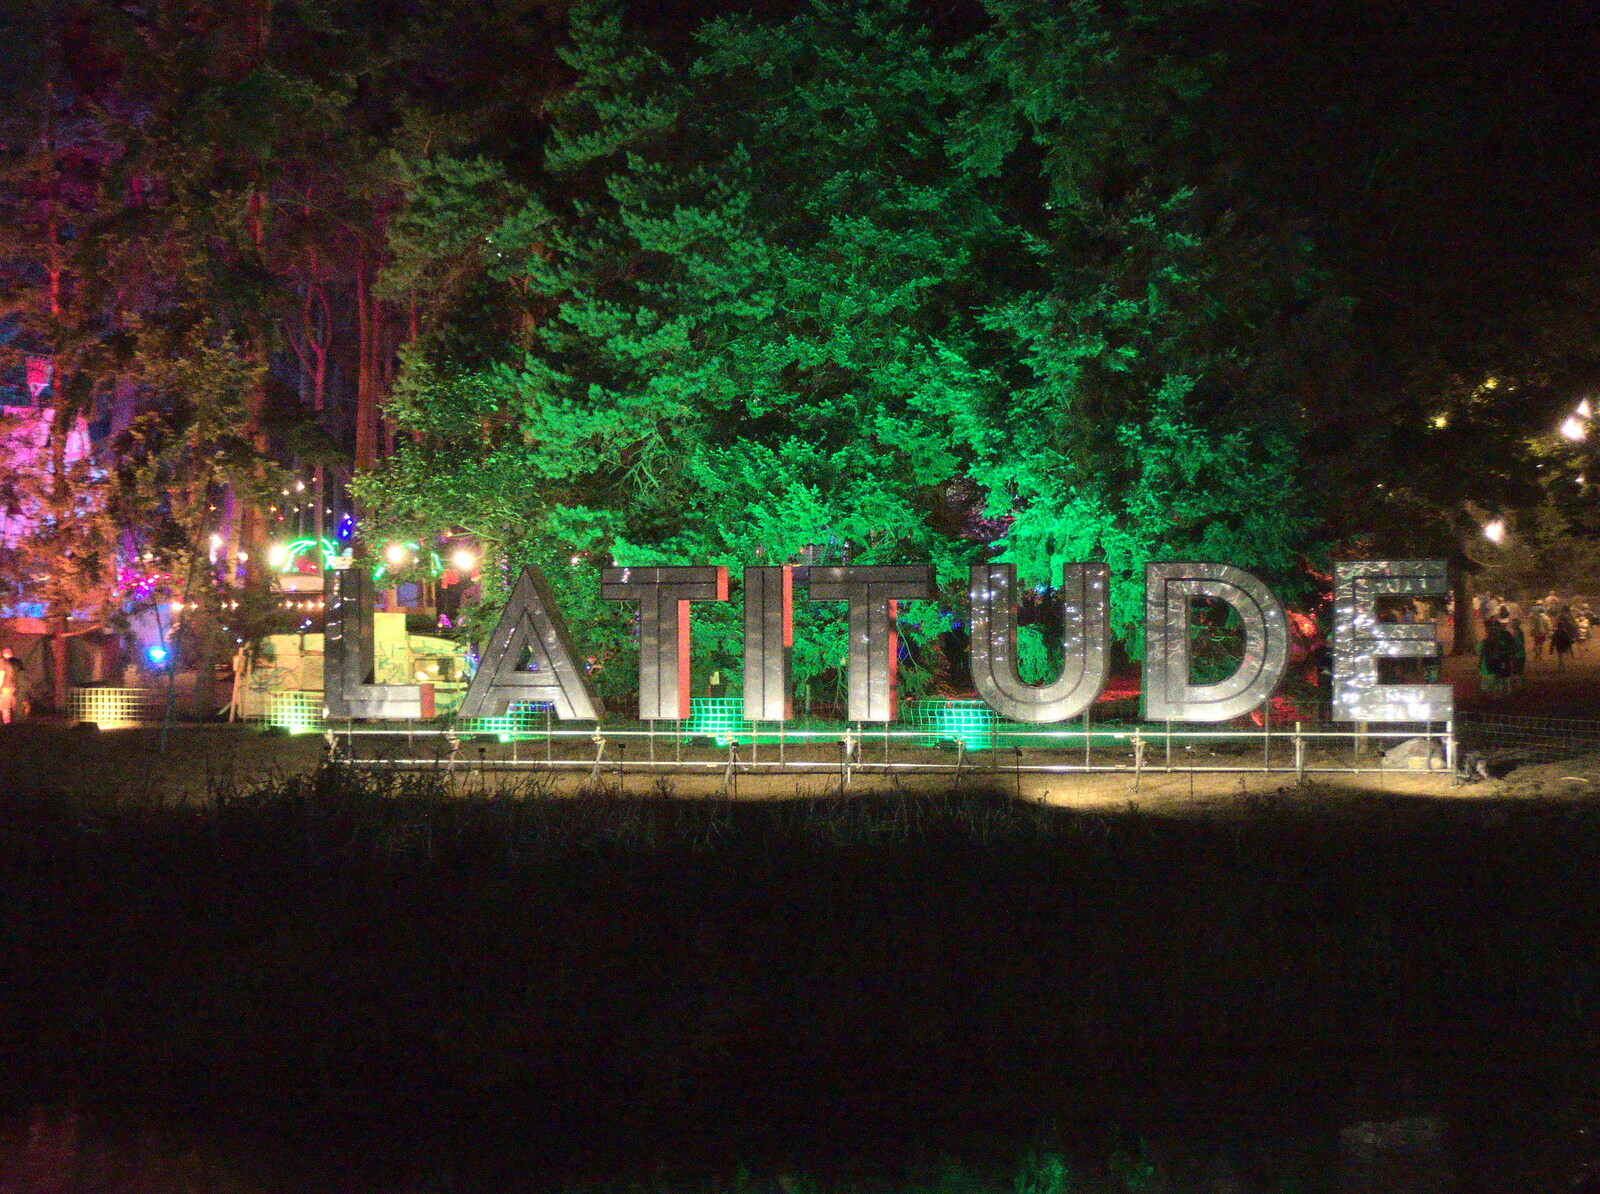 A Day at Latitude, Henham Park, Suffolk - 24th July 2022: The Latitude sign